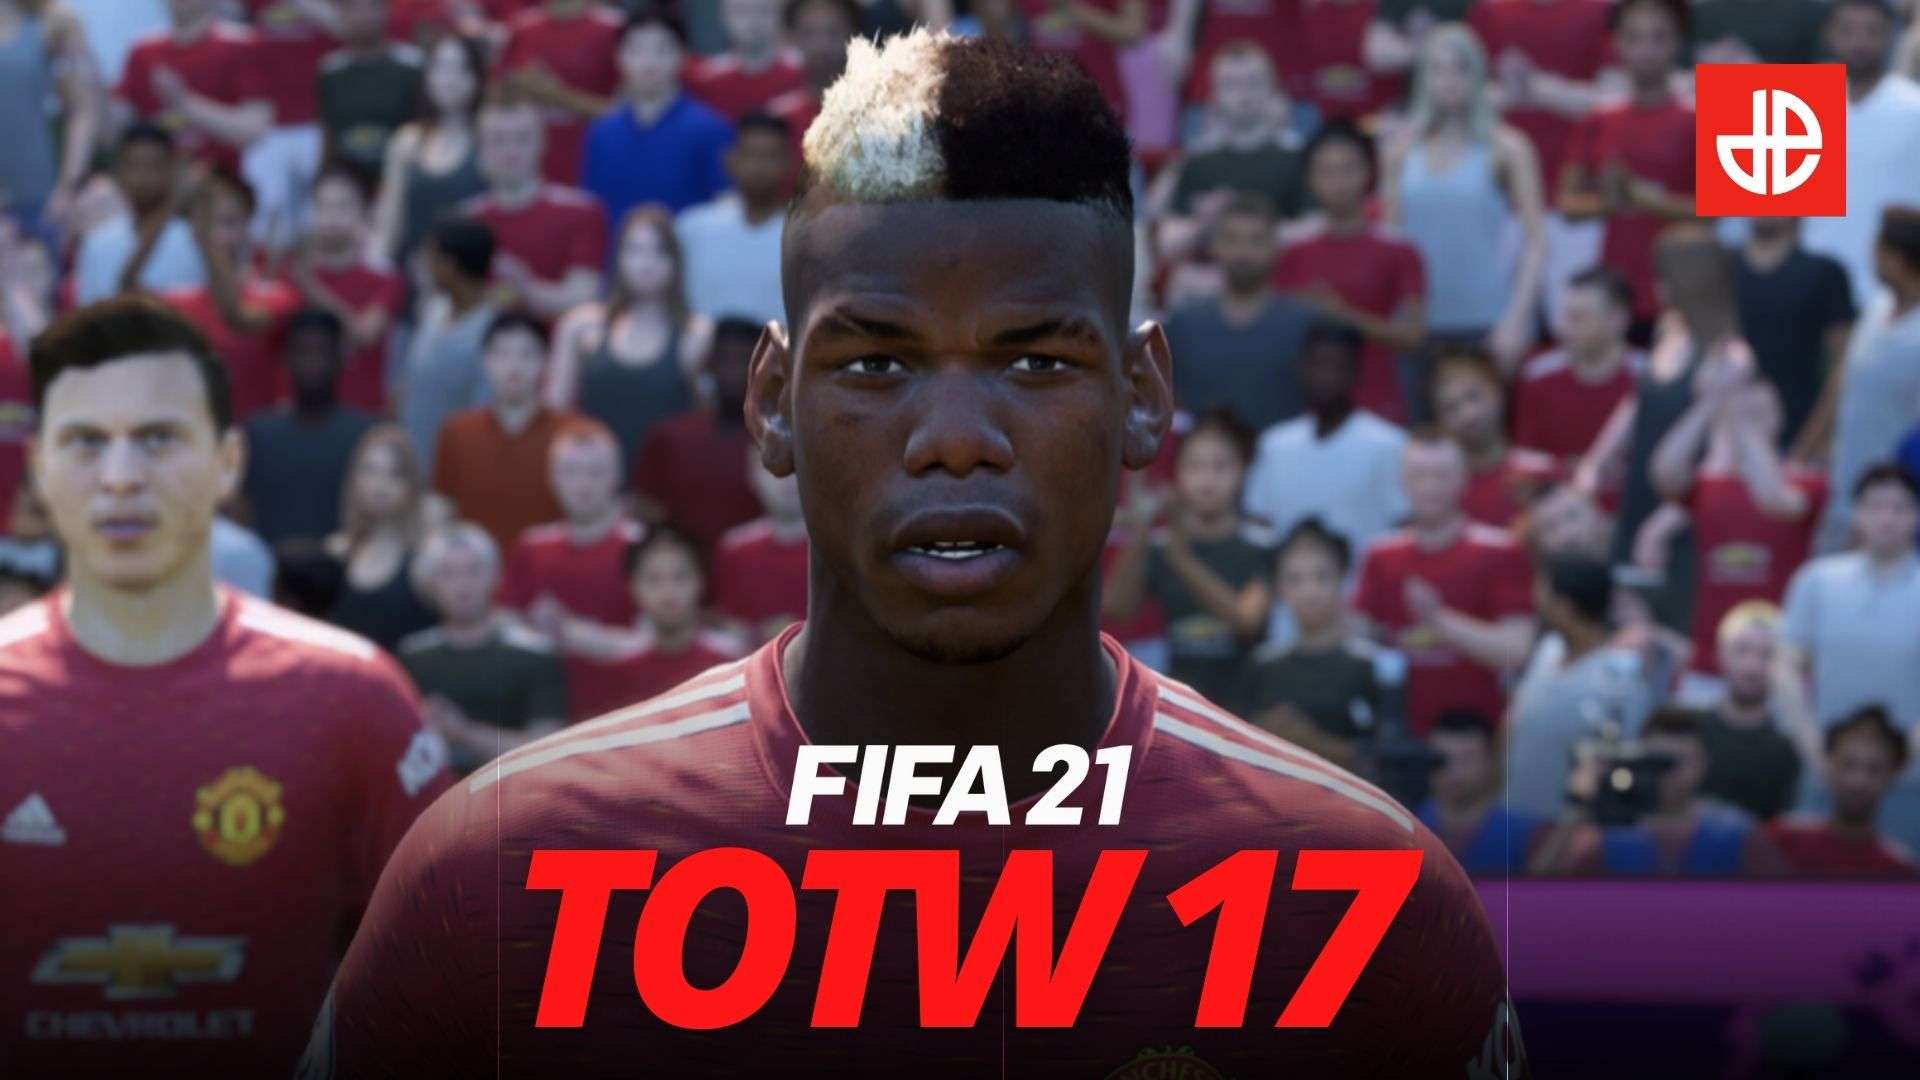 FIFA 21 totw 17 pogba